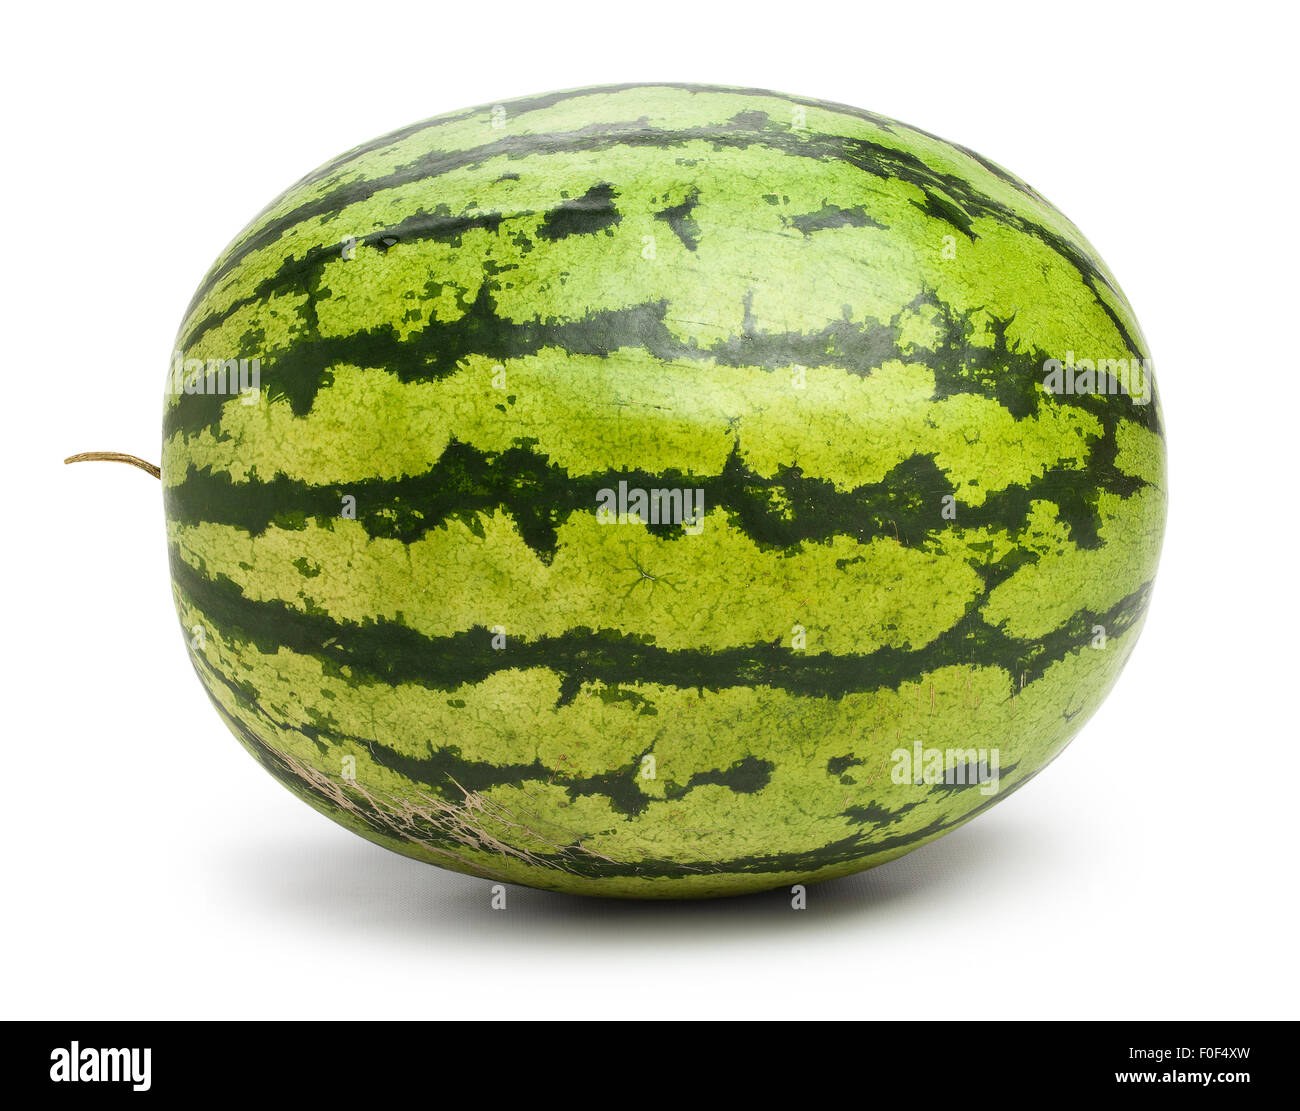 Wassermelone isoliert Stockfoto